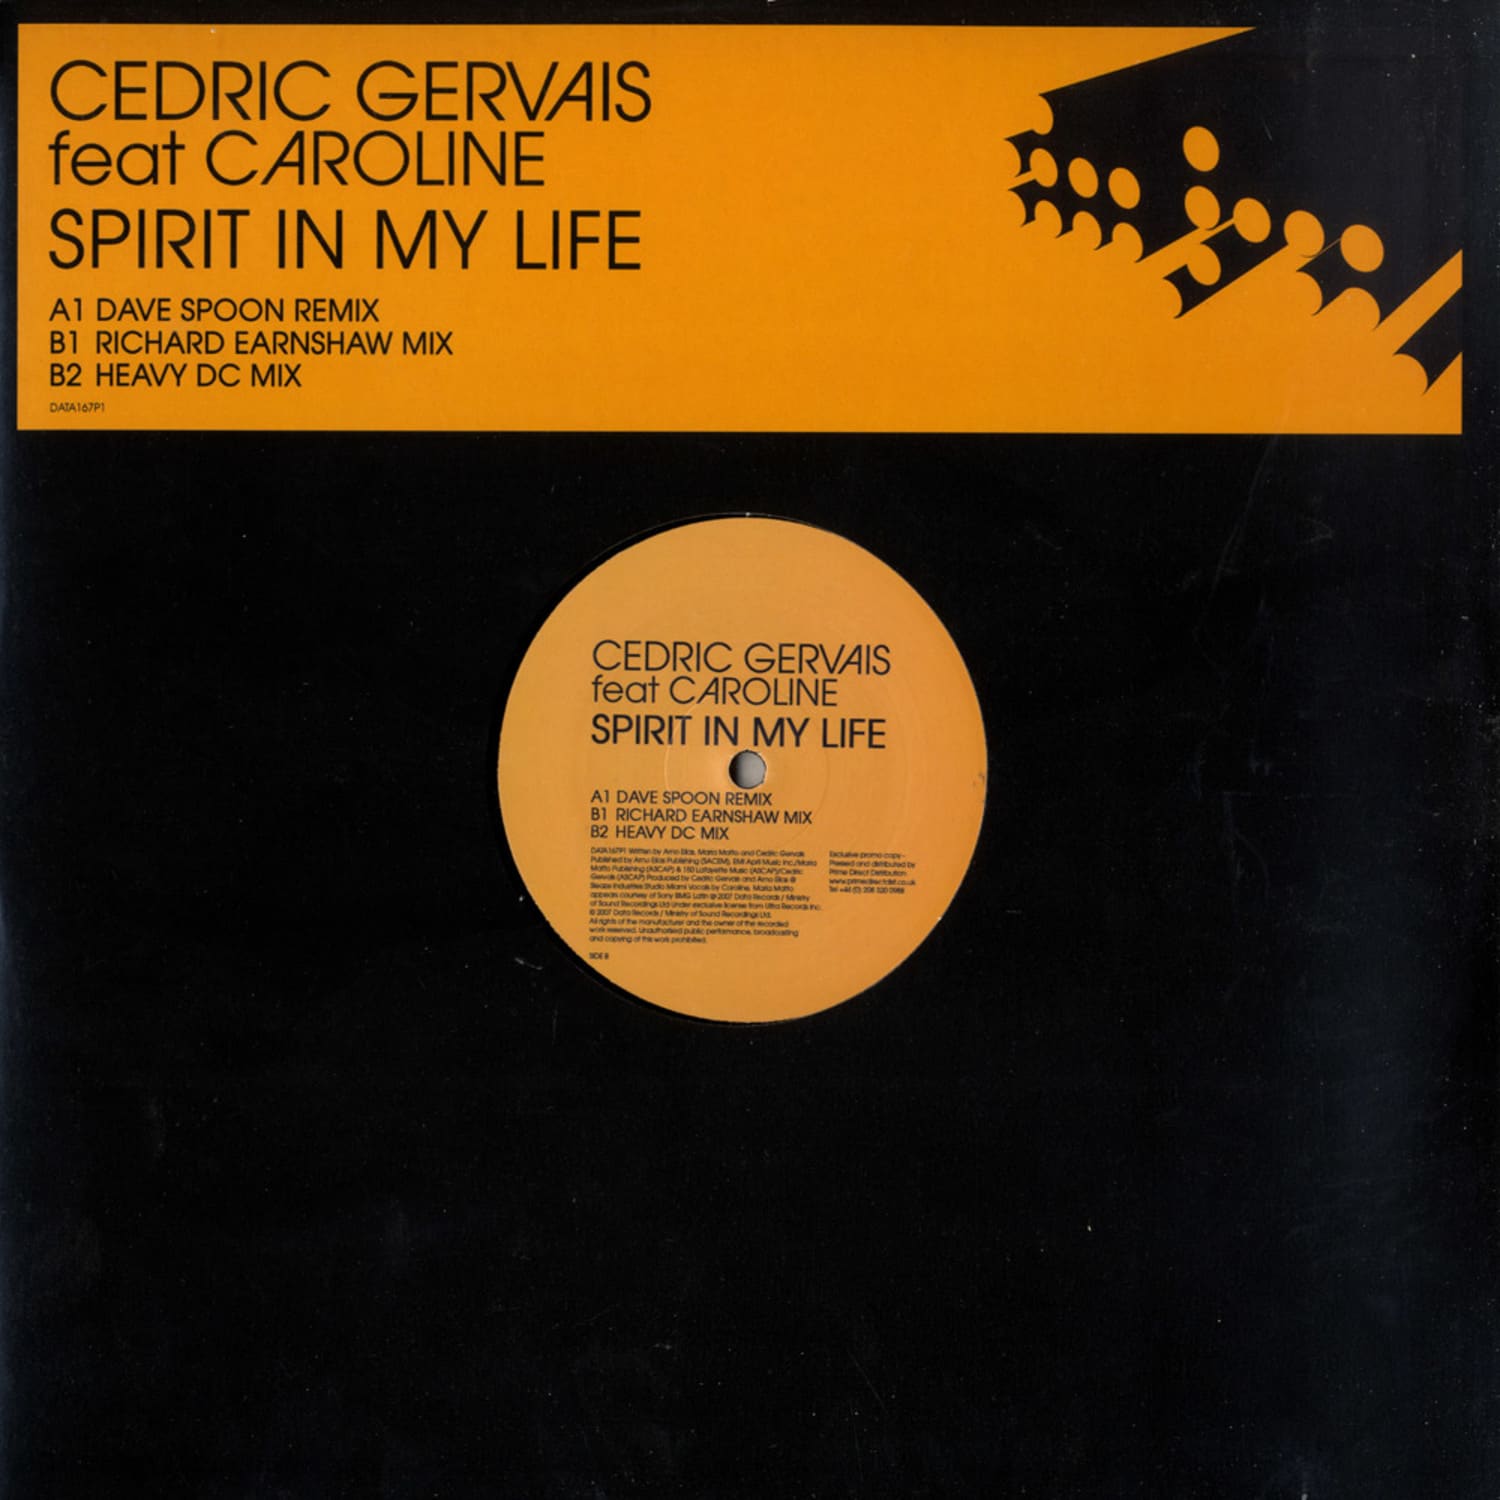 Cedric Gervais feat Caroline - SPIRIT IN MY LIFE